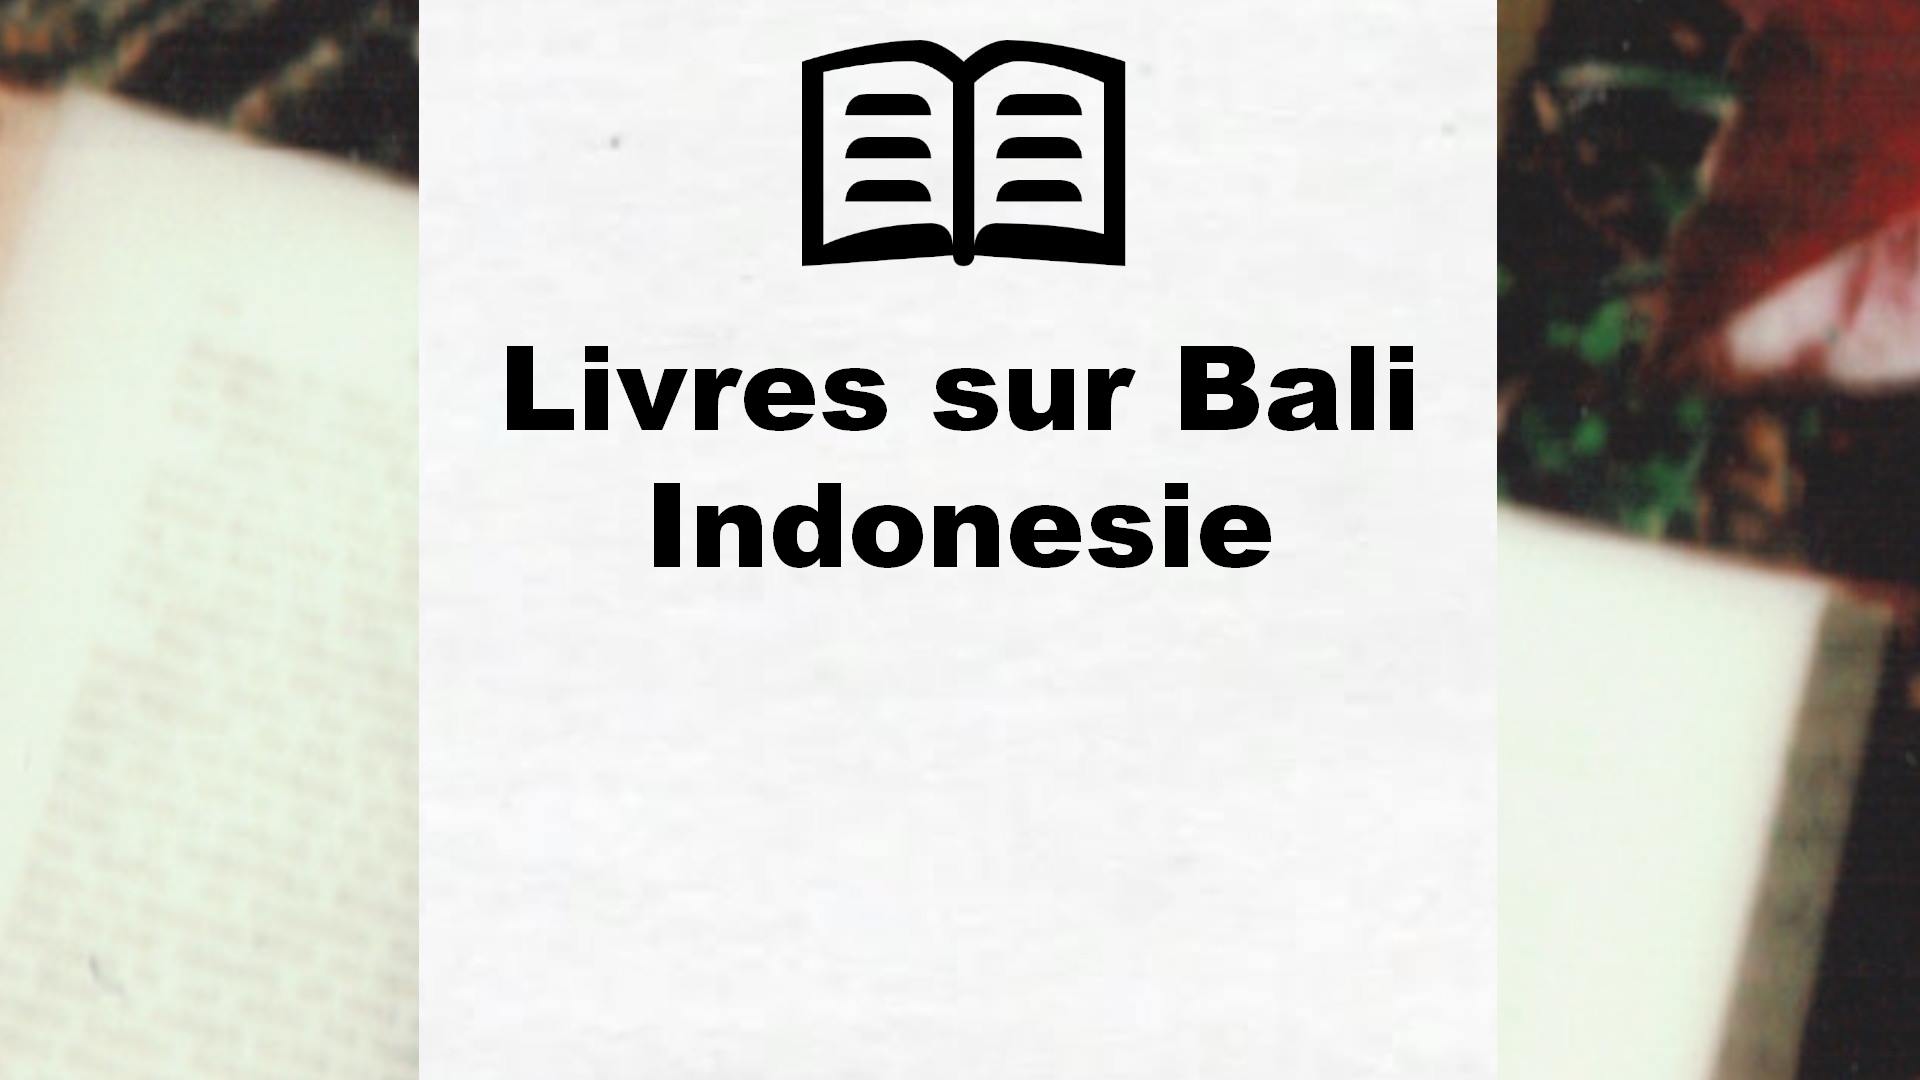 Livres sur Bali Indonesie